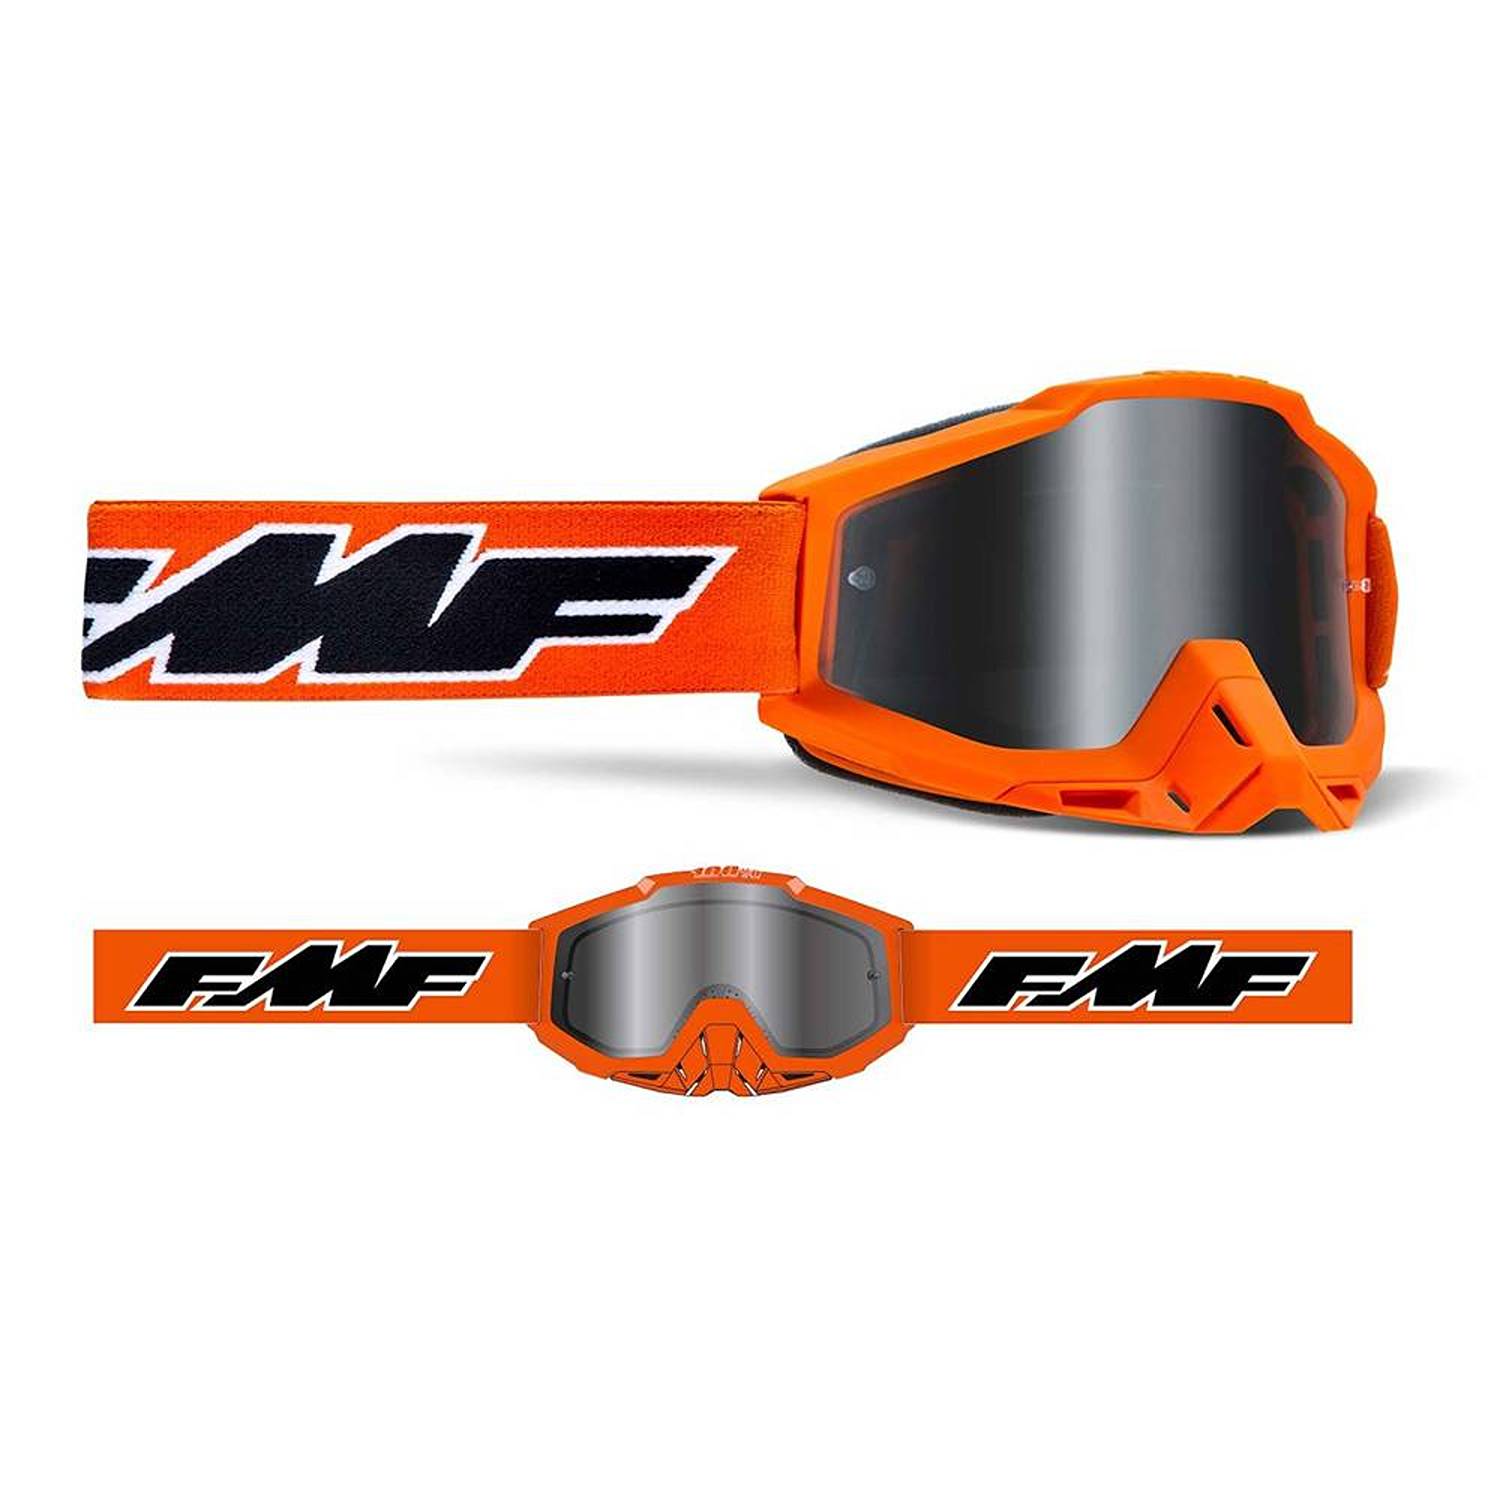 FMF Powerbomb Rocket Orange Mirror Silver Goggles Size